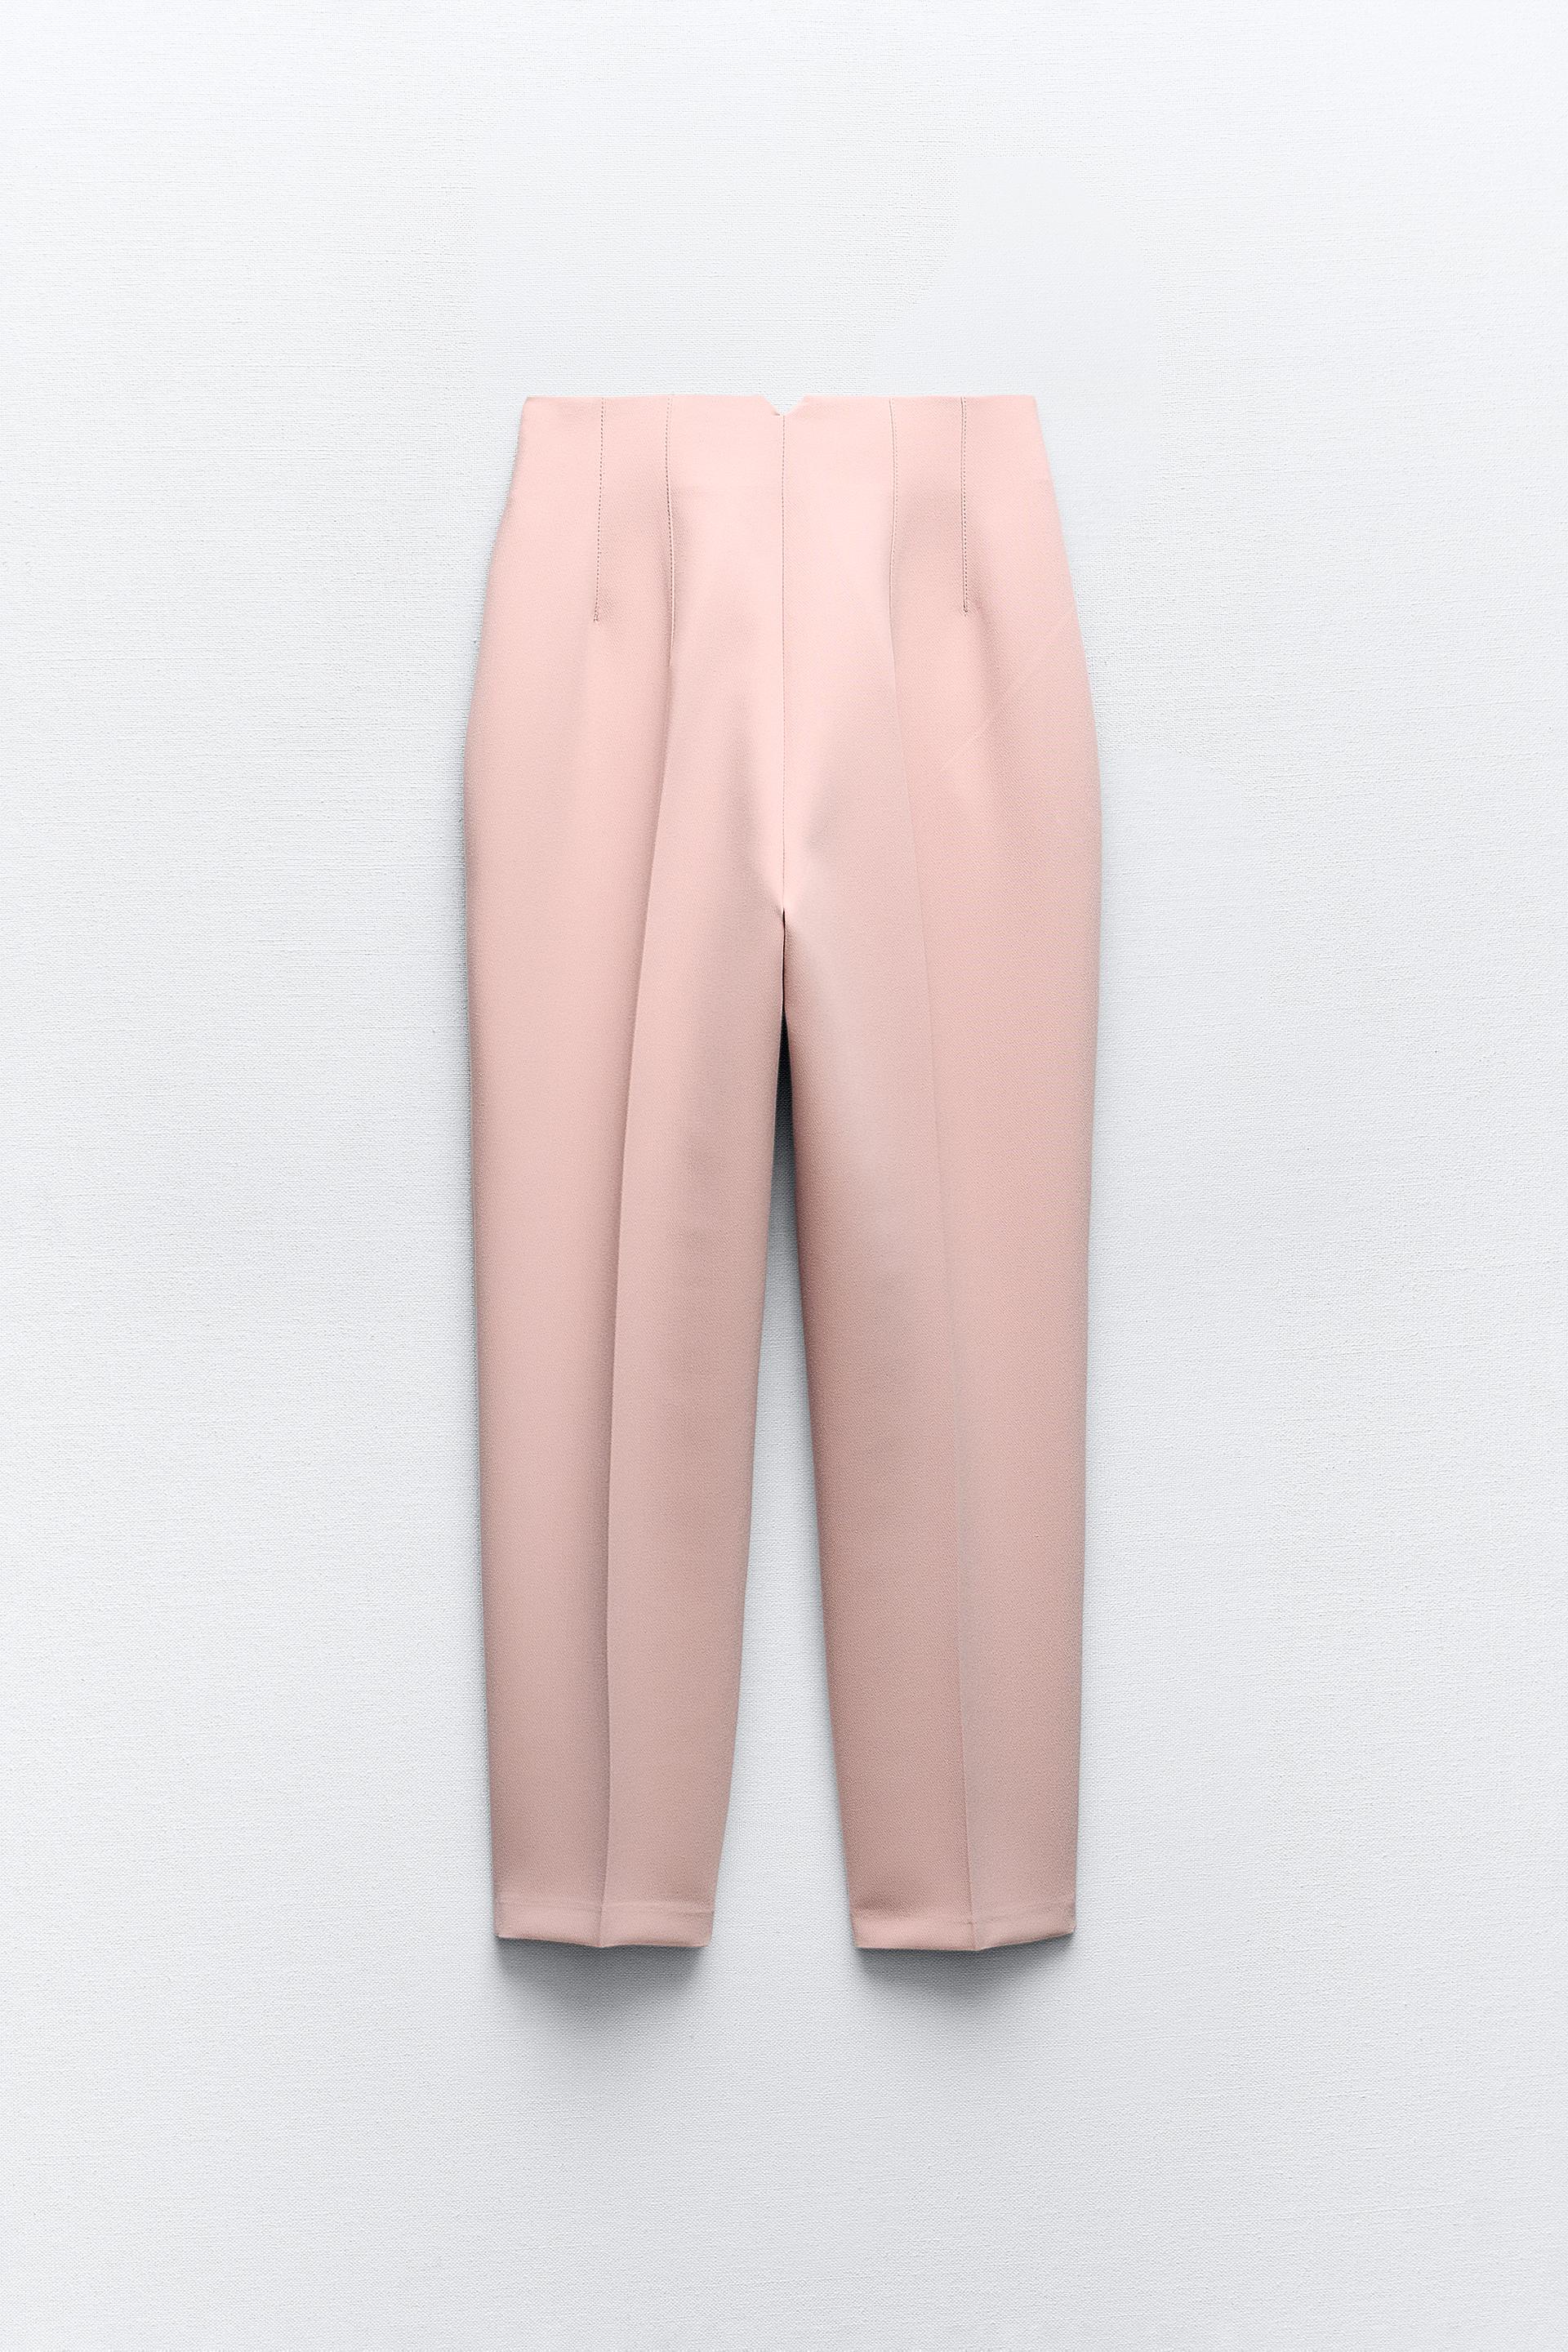 Zara, Pants & Jumpsuits, Zara Highwaisted Pants Blue Size S 79532420